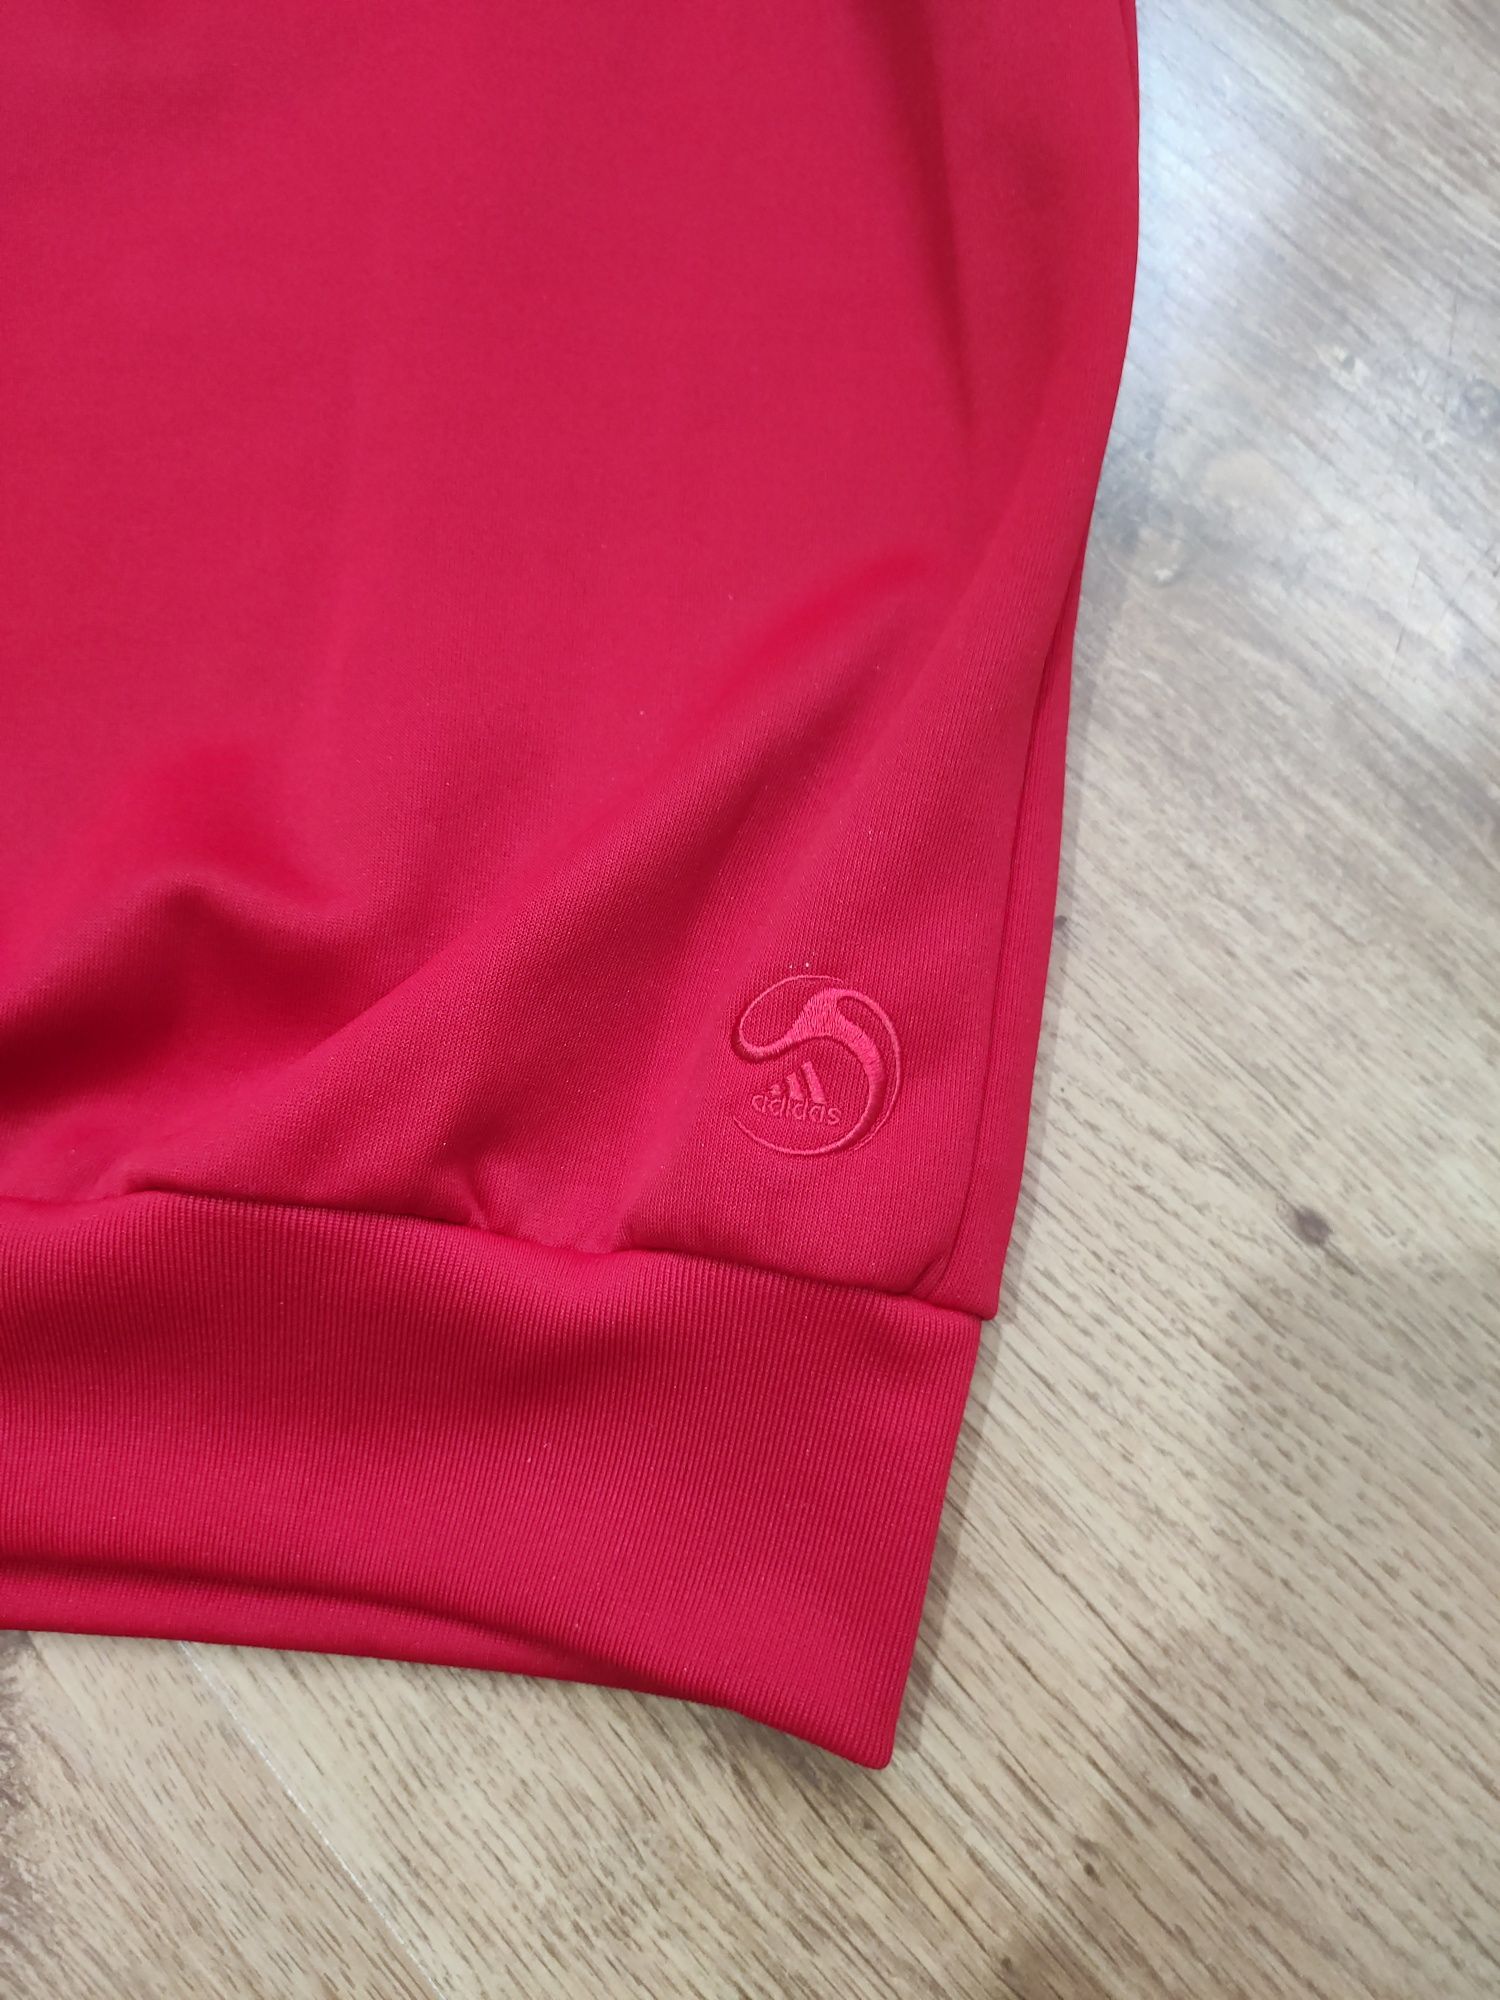 Bluza Adidas Naționala Spaniei vintage mărimea M/L